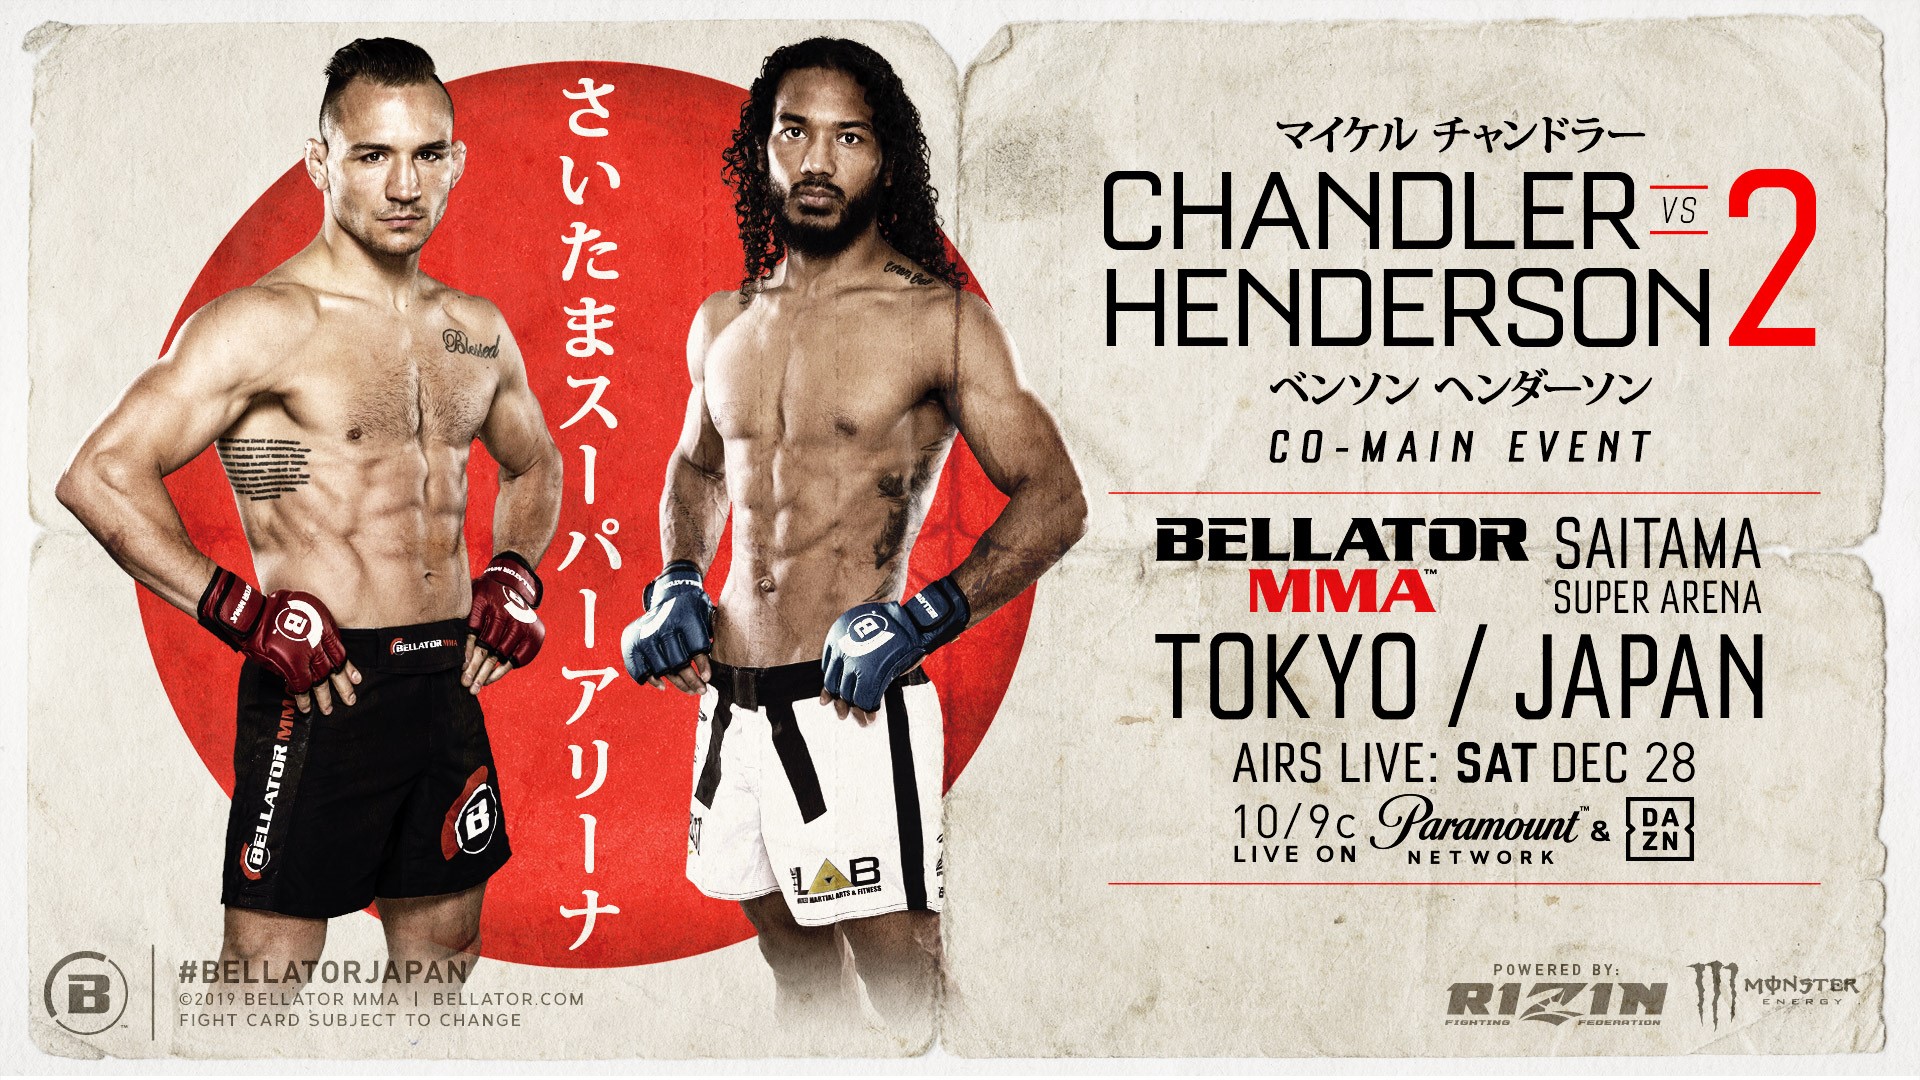 Michael Chandler & Benson Henderson 2 Booked for Co-Main Event of Bellator Japan1920 x 1080